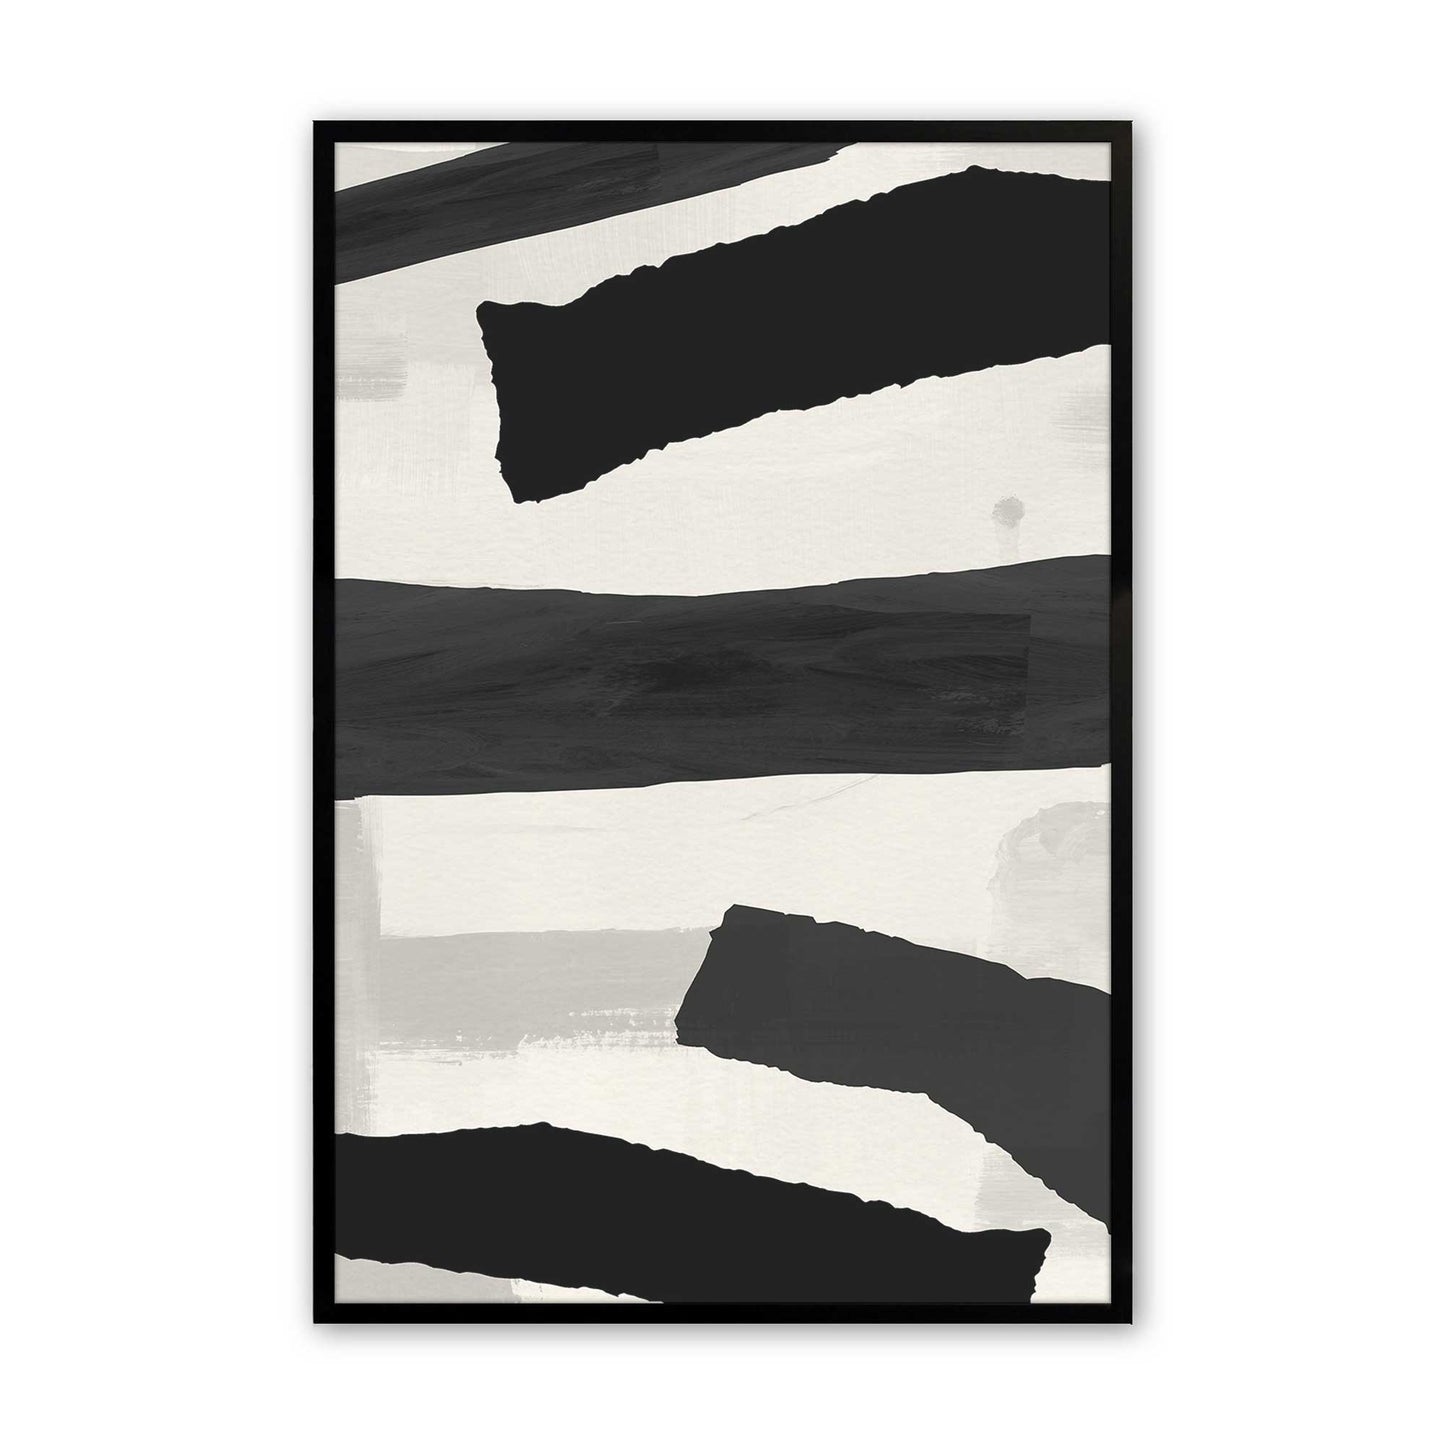 [Color:Satin Black], Picture of art in a Satin Black frame